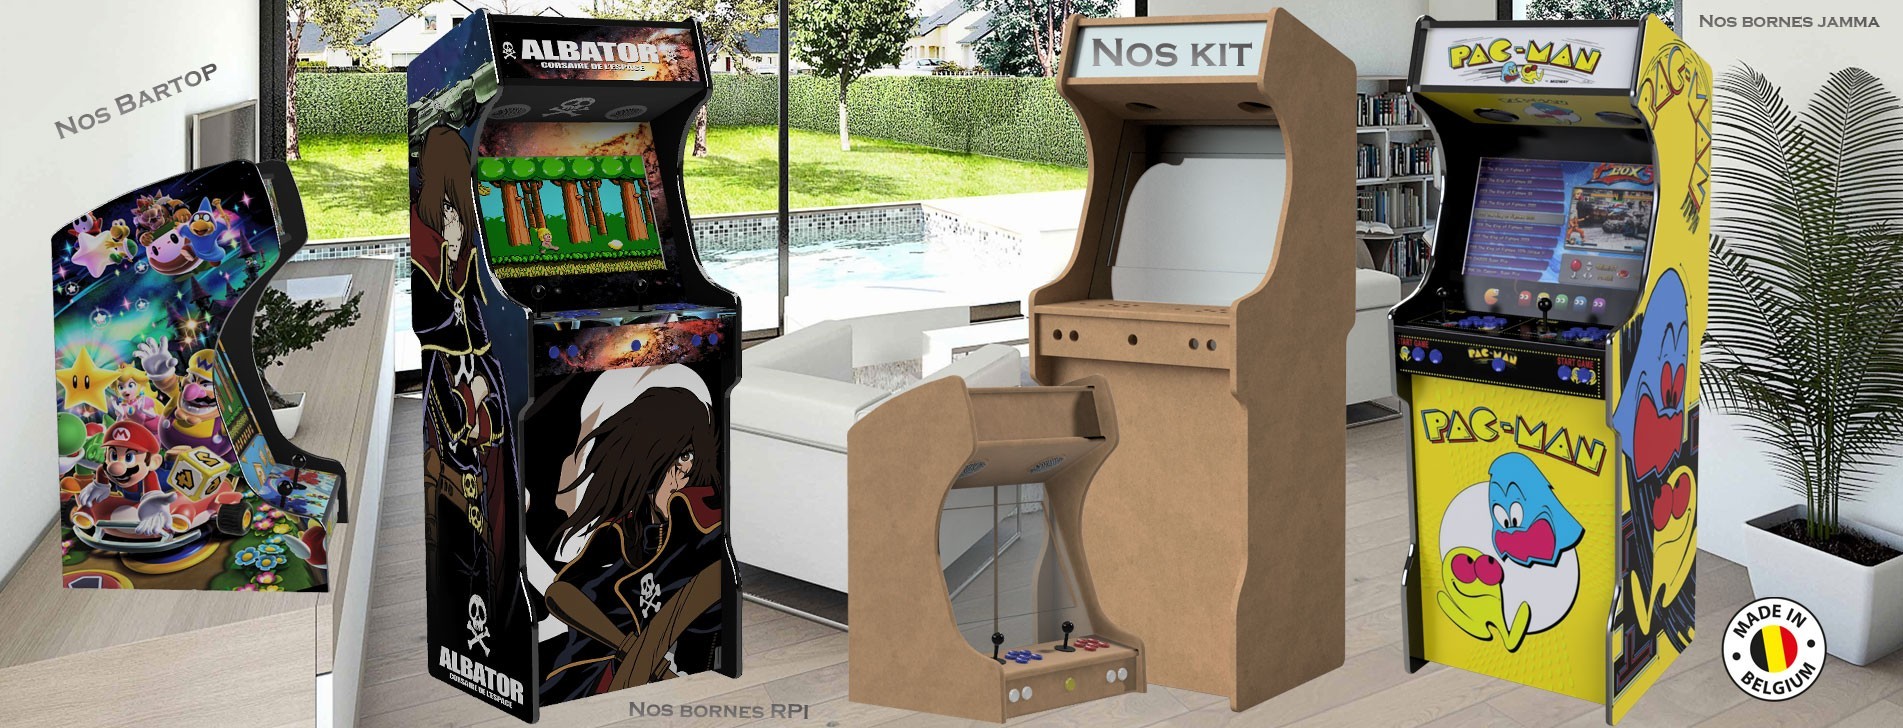 Kit bois borne arcade - Cdiscount